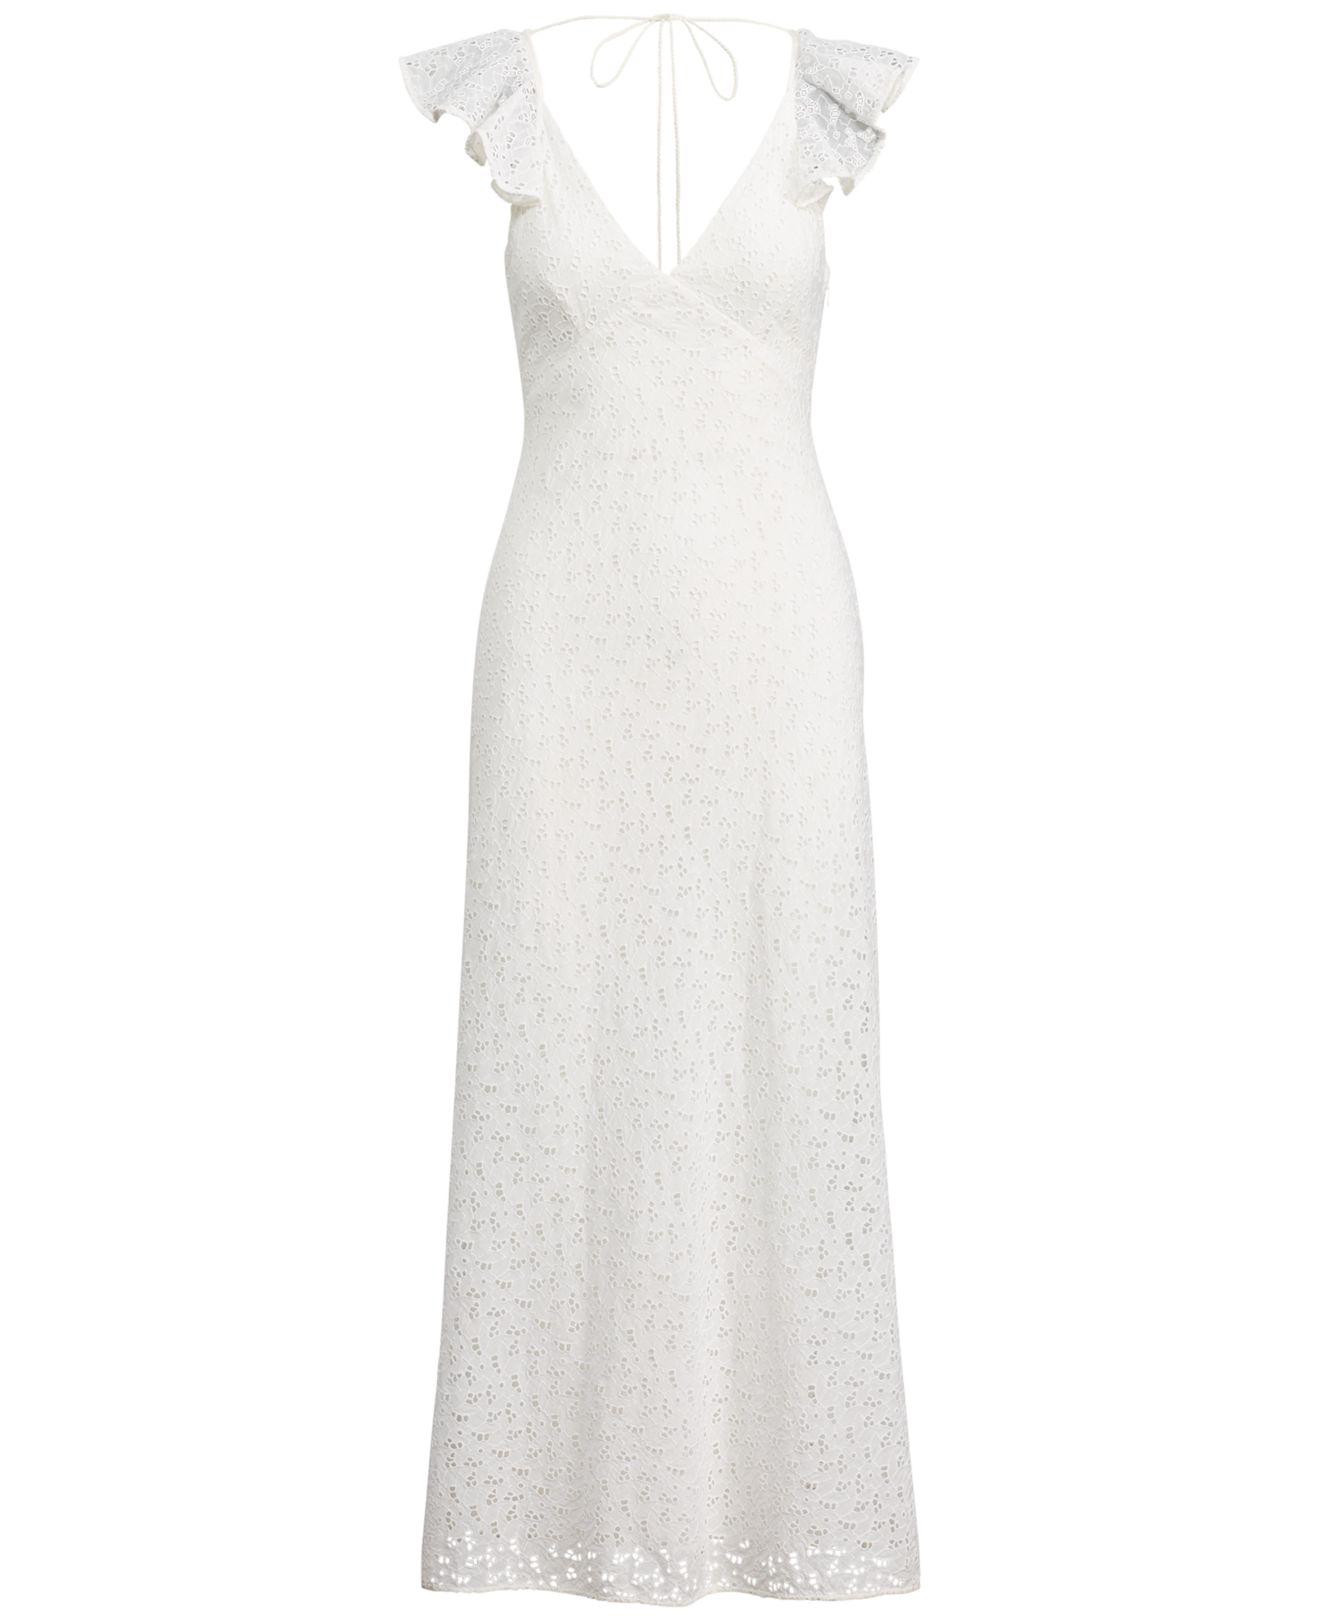 Polo Ralph Lauren Eyelet Open-back Cotton Dress in White | Lyst